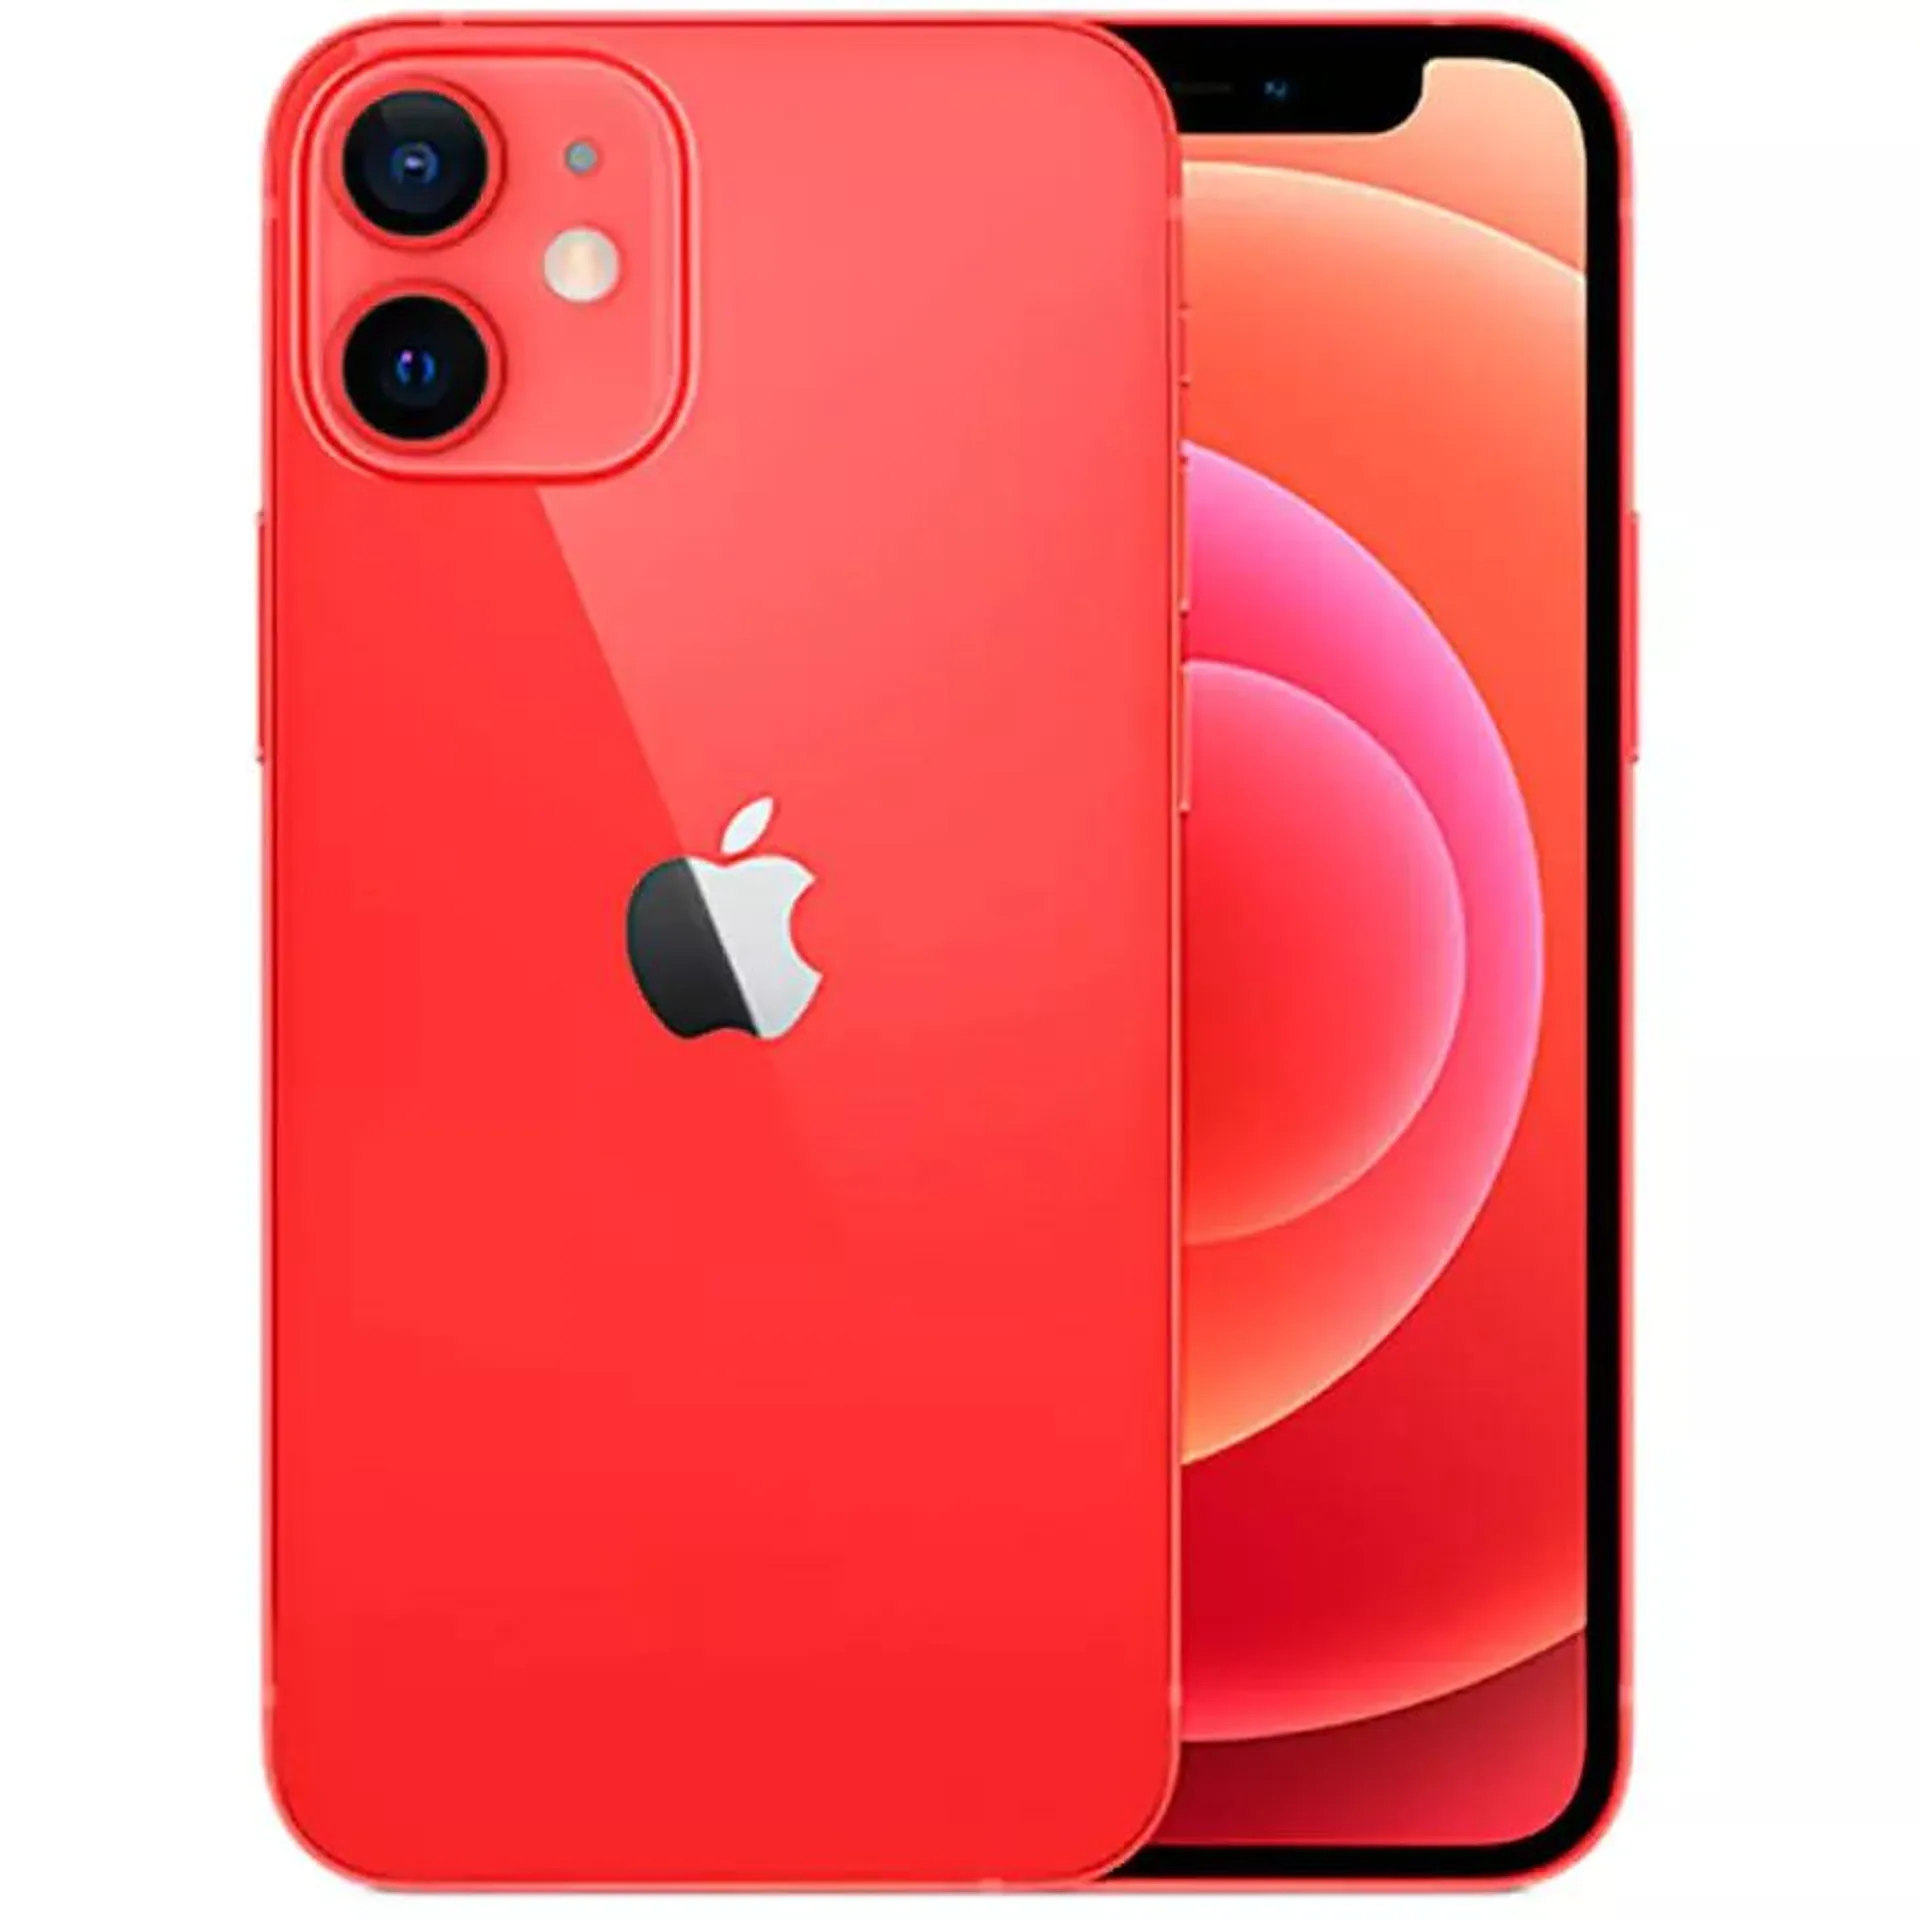 Celular seminuevo iPhone 12 Mini 64GB - Rojo - 12MINIRED64AB - Cat. AB 12M64IPH5